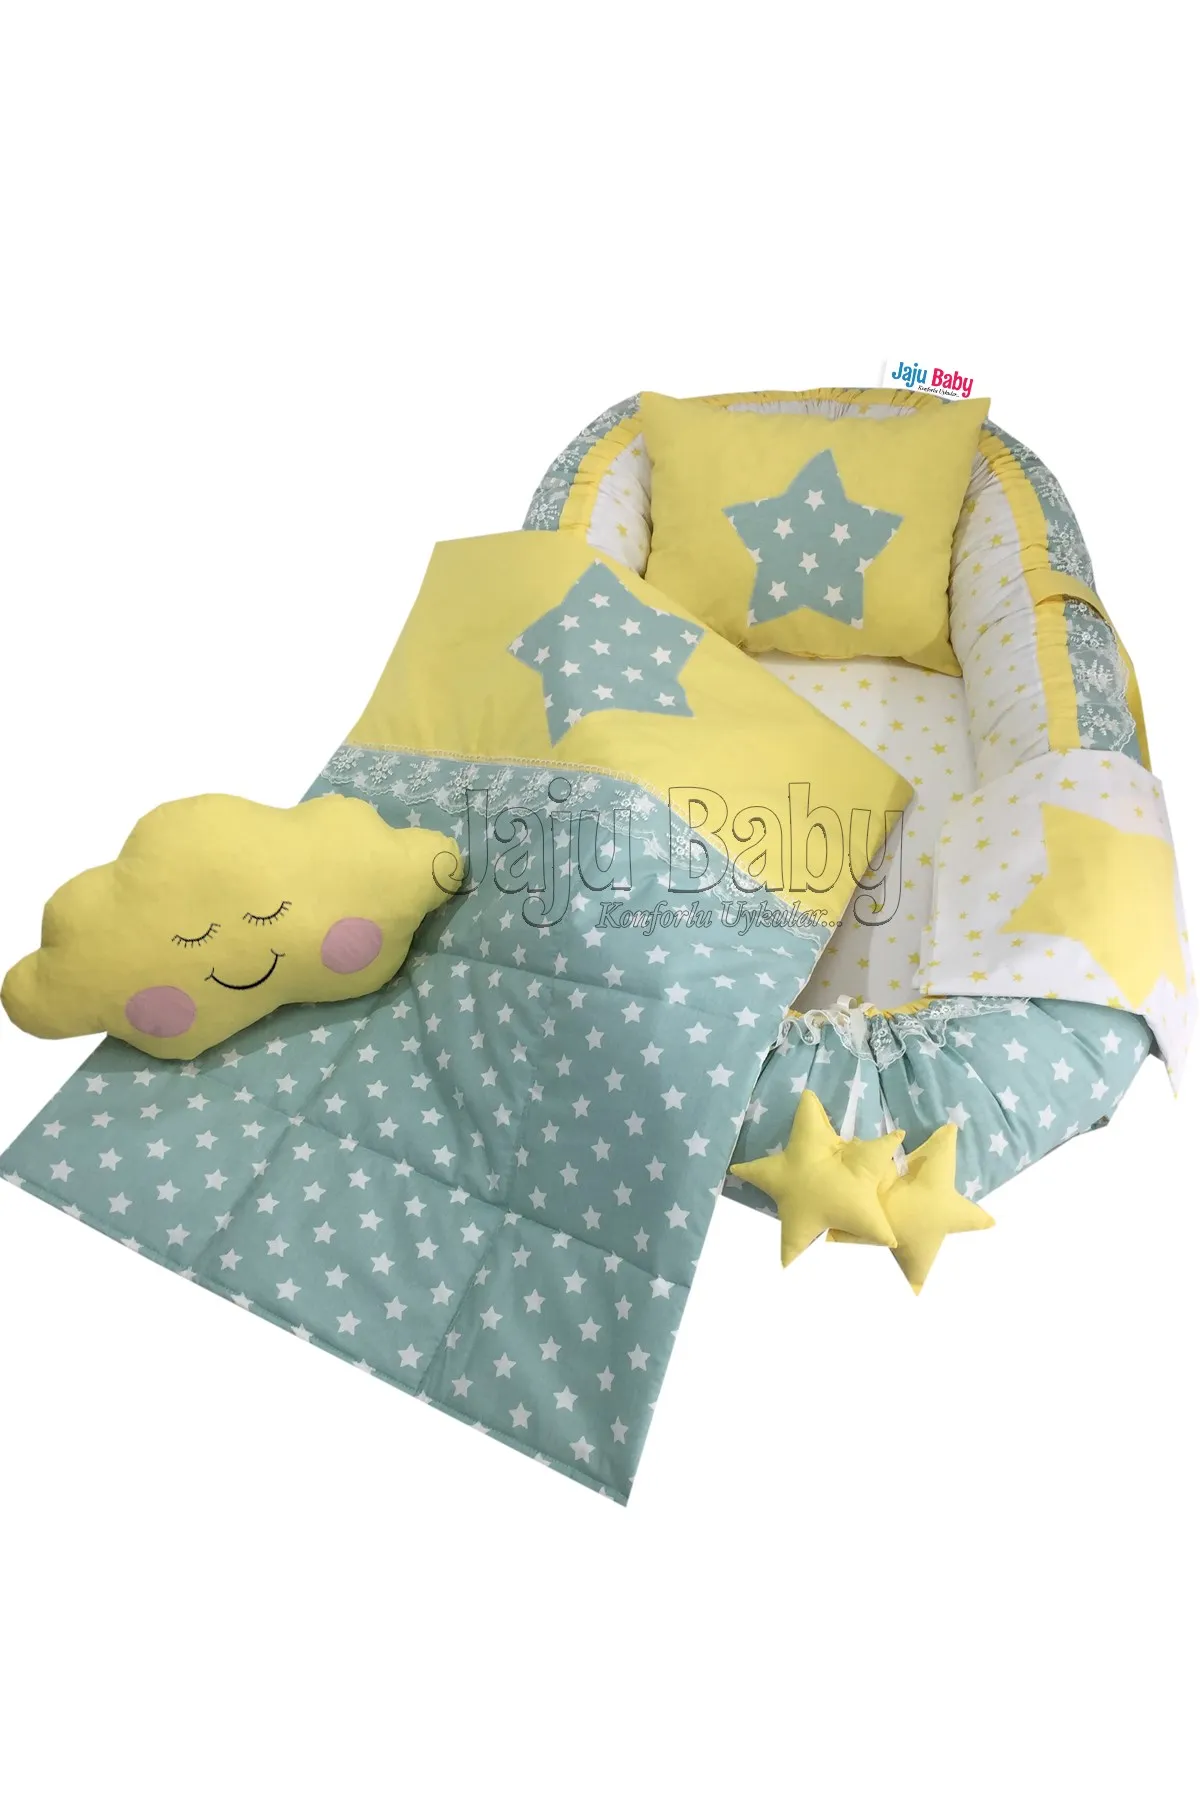 Jaju Baby Handmade Green-Yellow Star Orthopedic Lux Design Babynest Star Set of 5, Nursing Apron GIFT! Mother Side Portable Bed